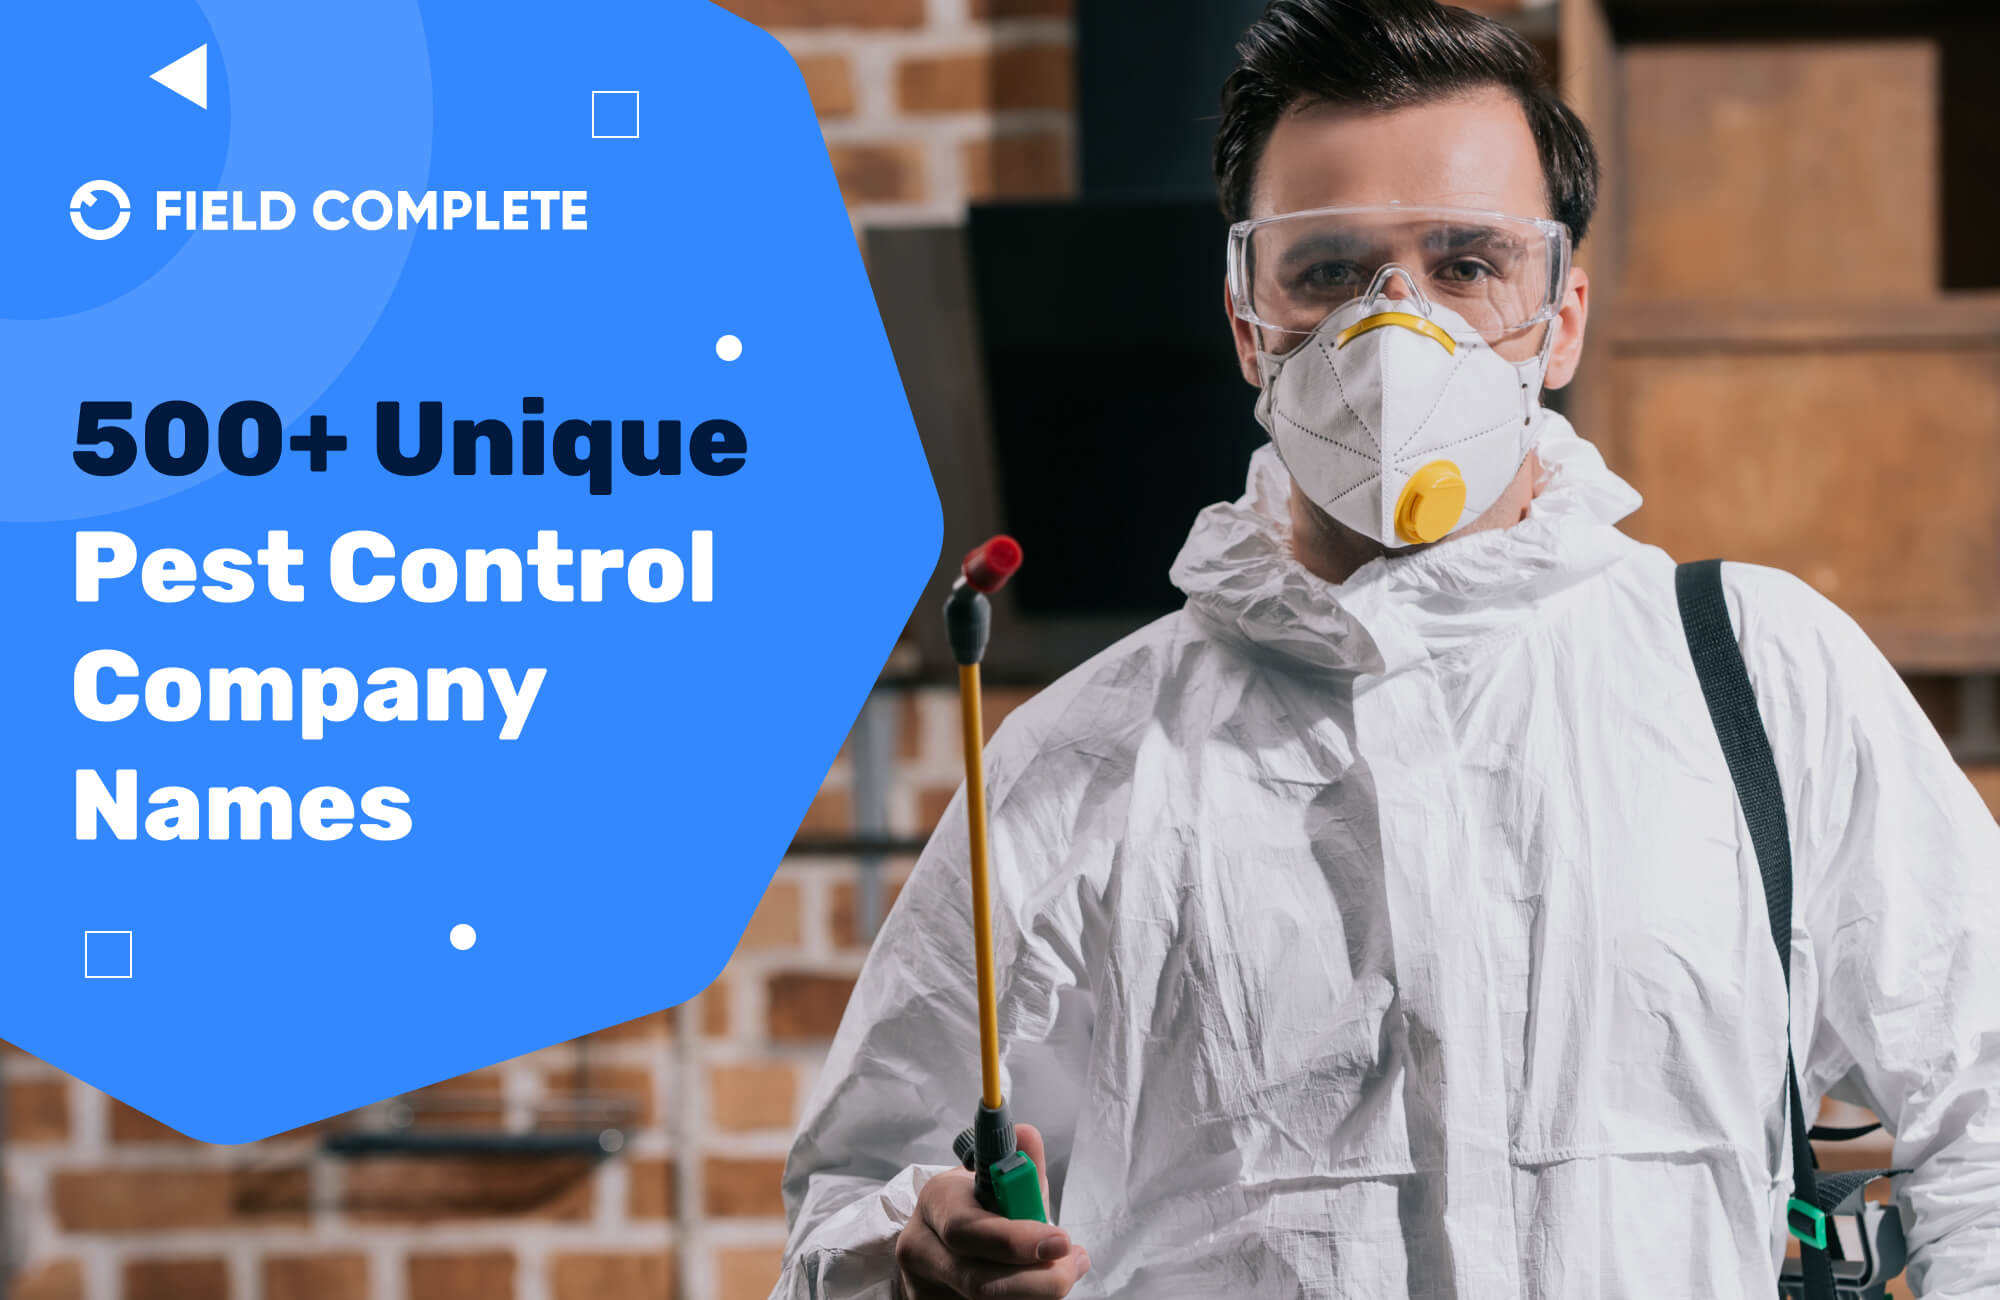 500+ Unique Pest Control Company Names to Kick-Start Your Business